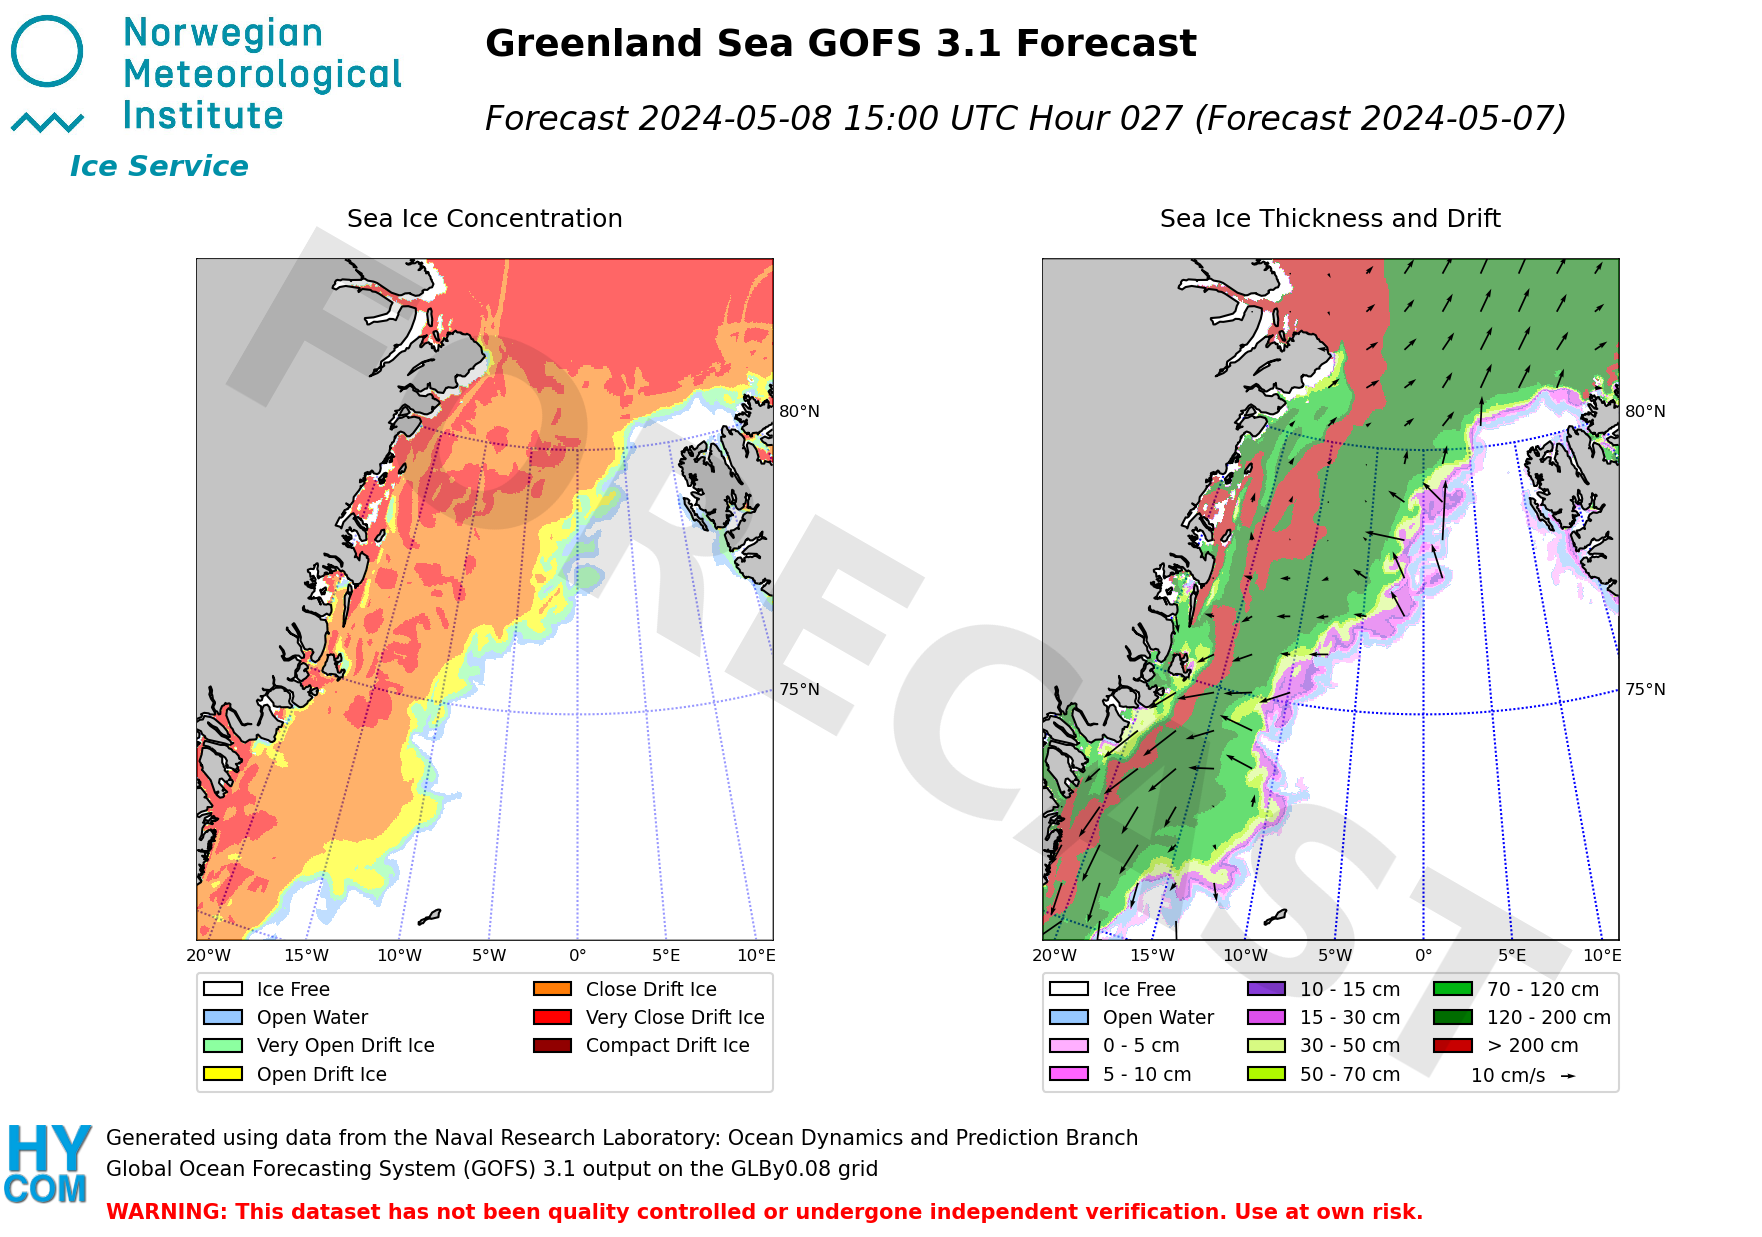 Latest GOF3.1 present day forecast